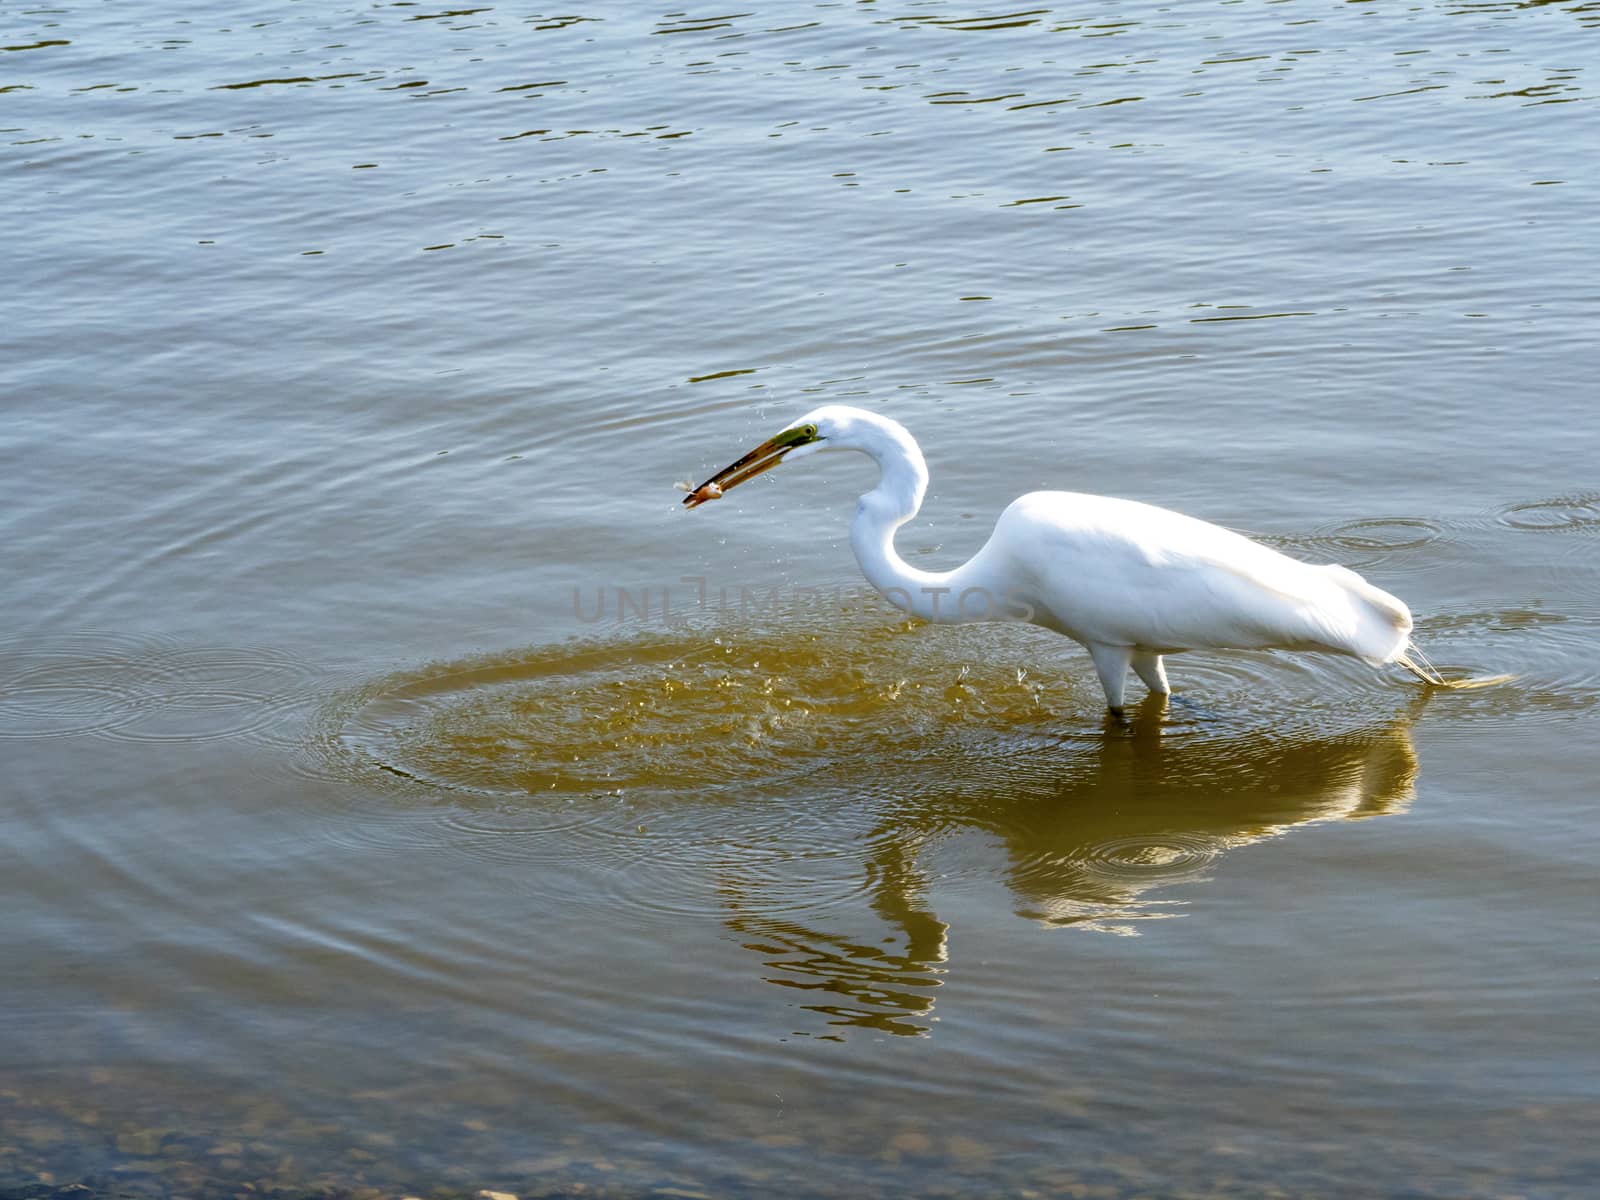 Closeup to a white heron on a lake